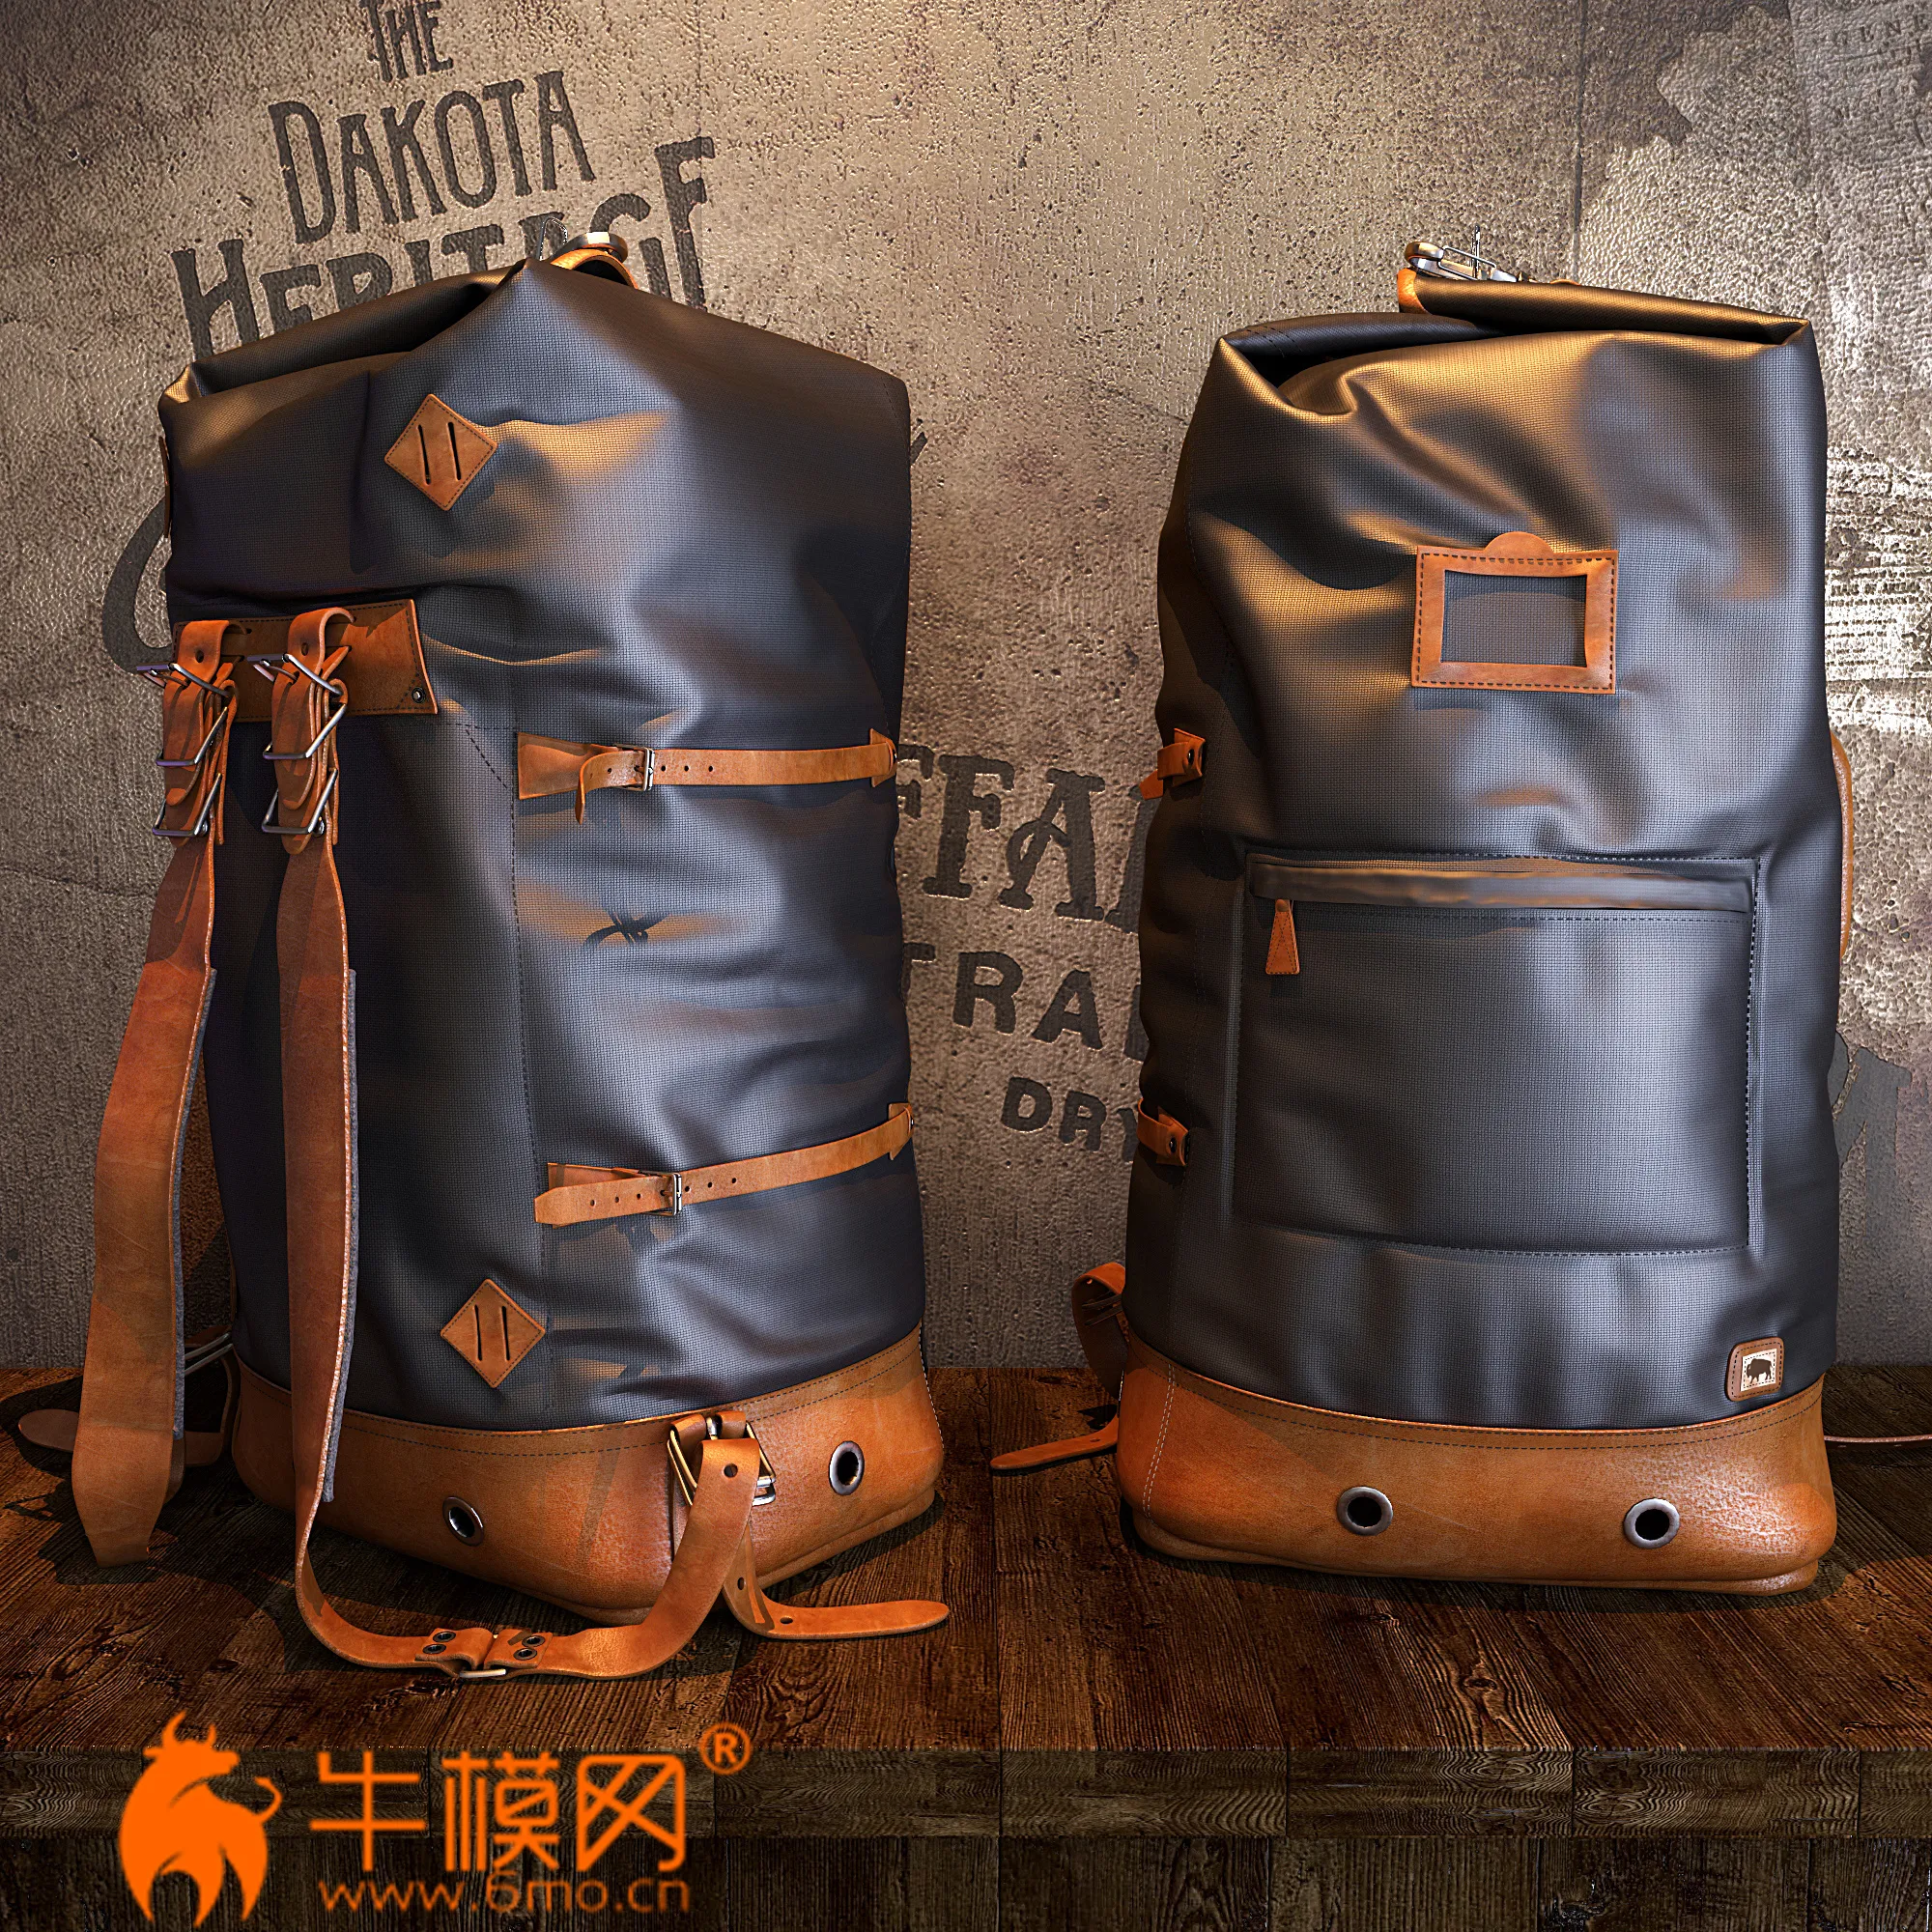 Buffalo Jackson Dakota Vintage Backpack Bag (max, obj) – 1261